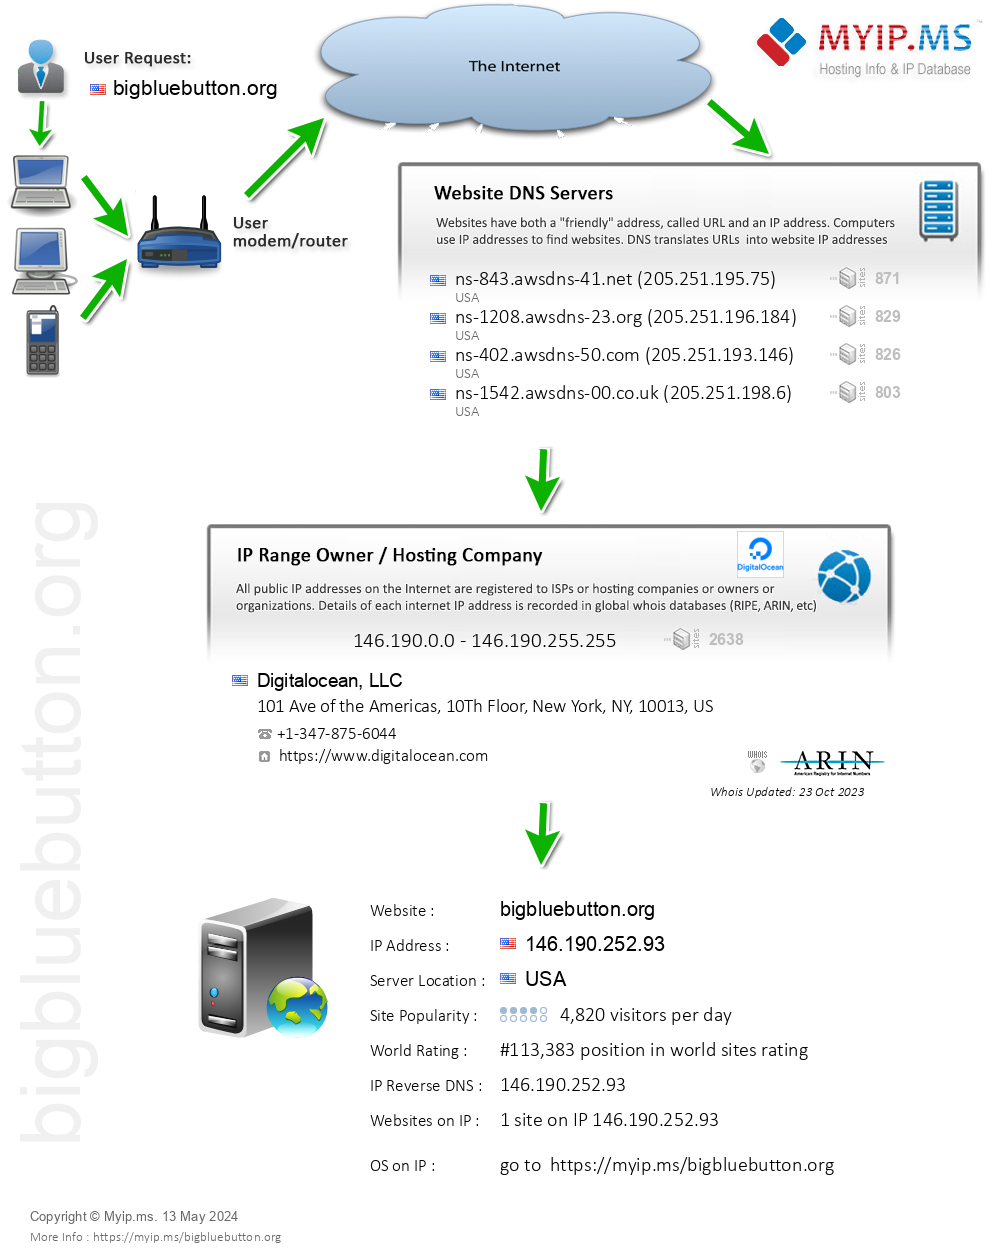 Bigbluebutton.org - Website Hosting Visual IP Diagram